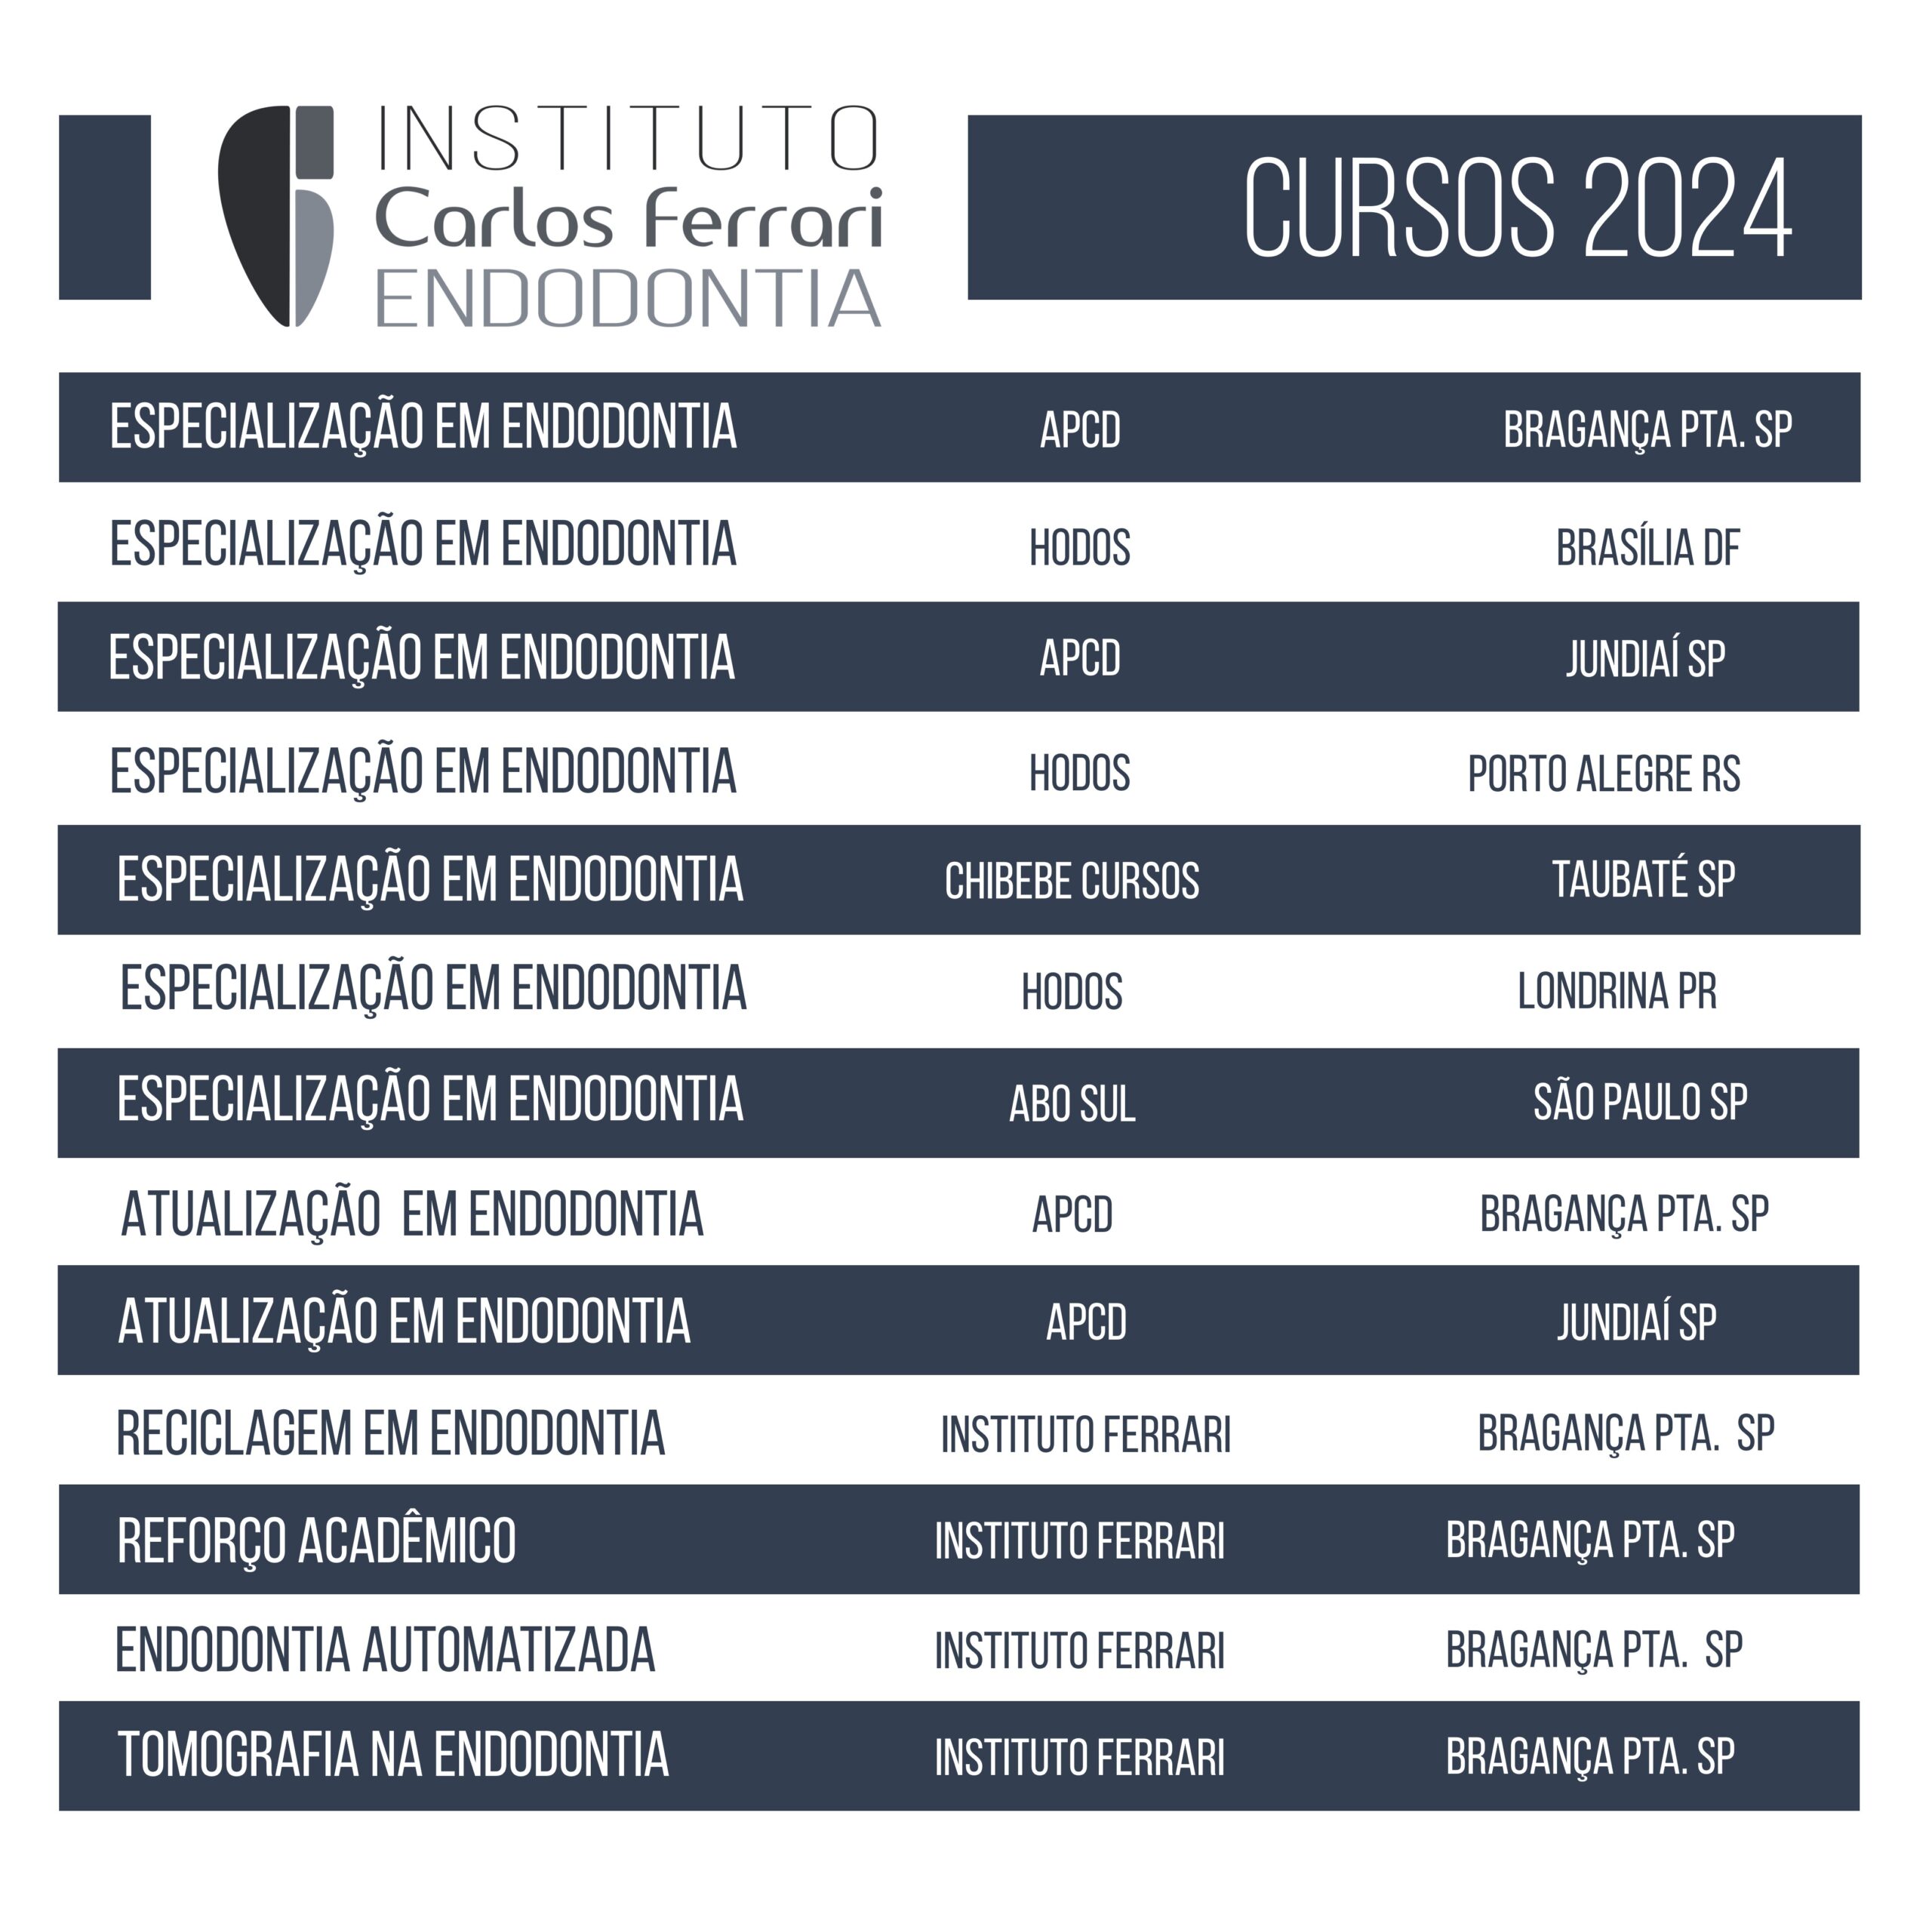 You are currently viewing Endodontics Courses. Carlos Ferrari Institute 2024.